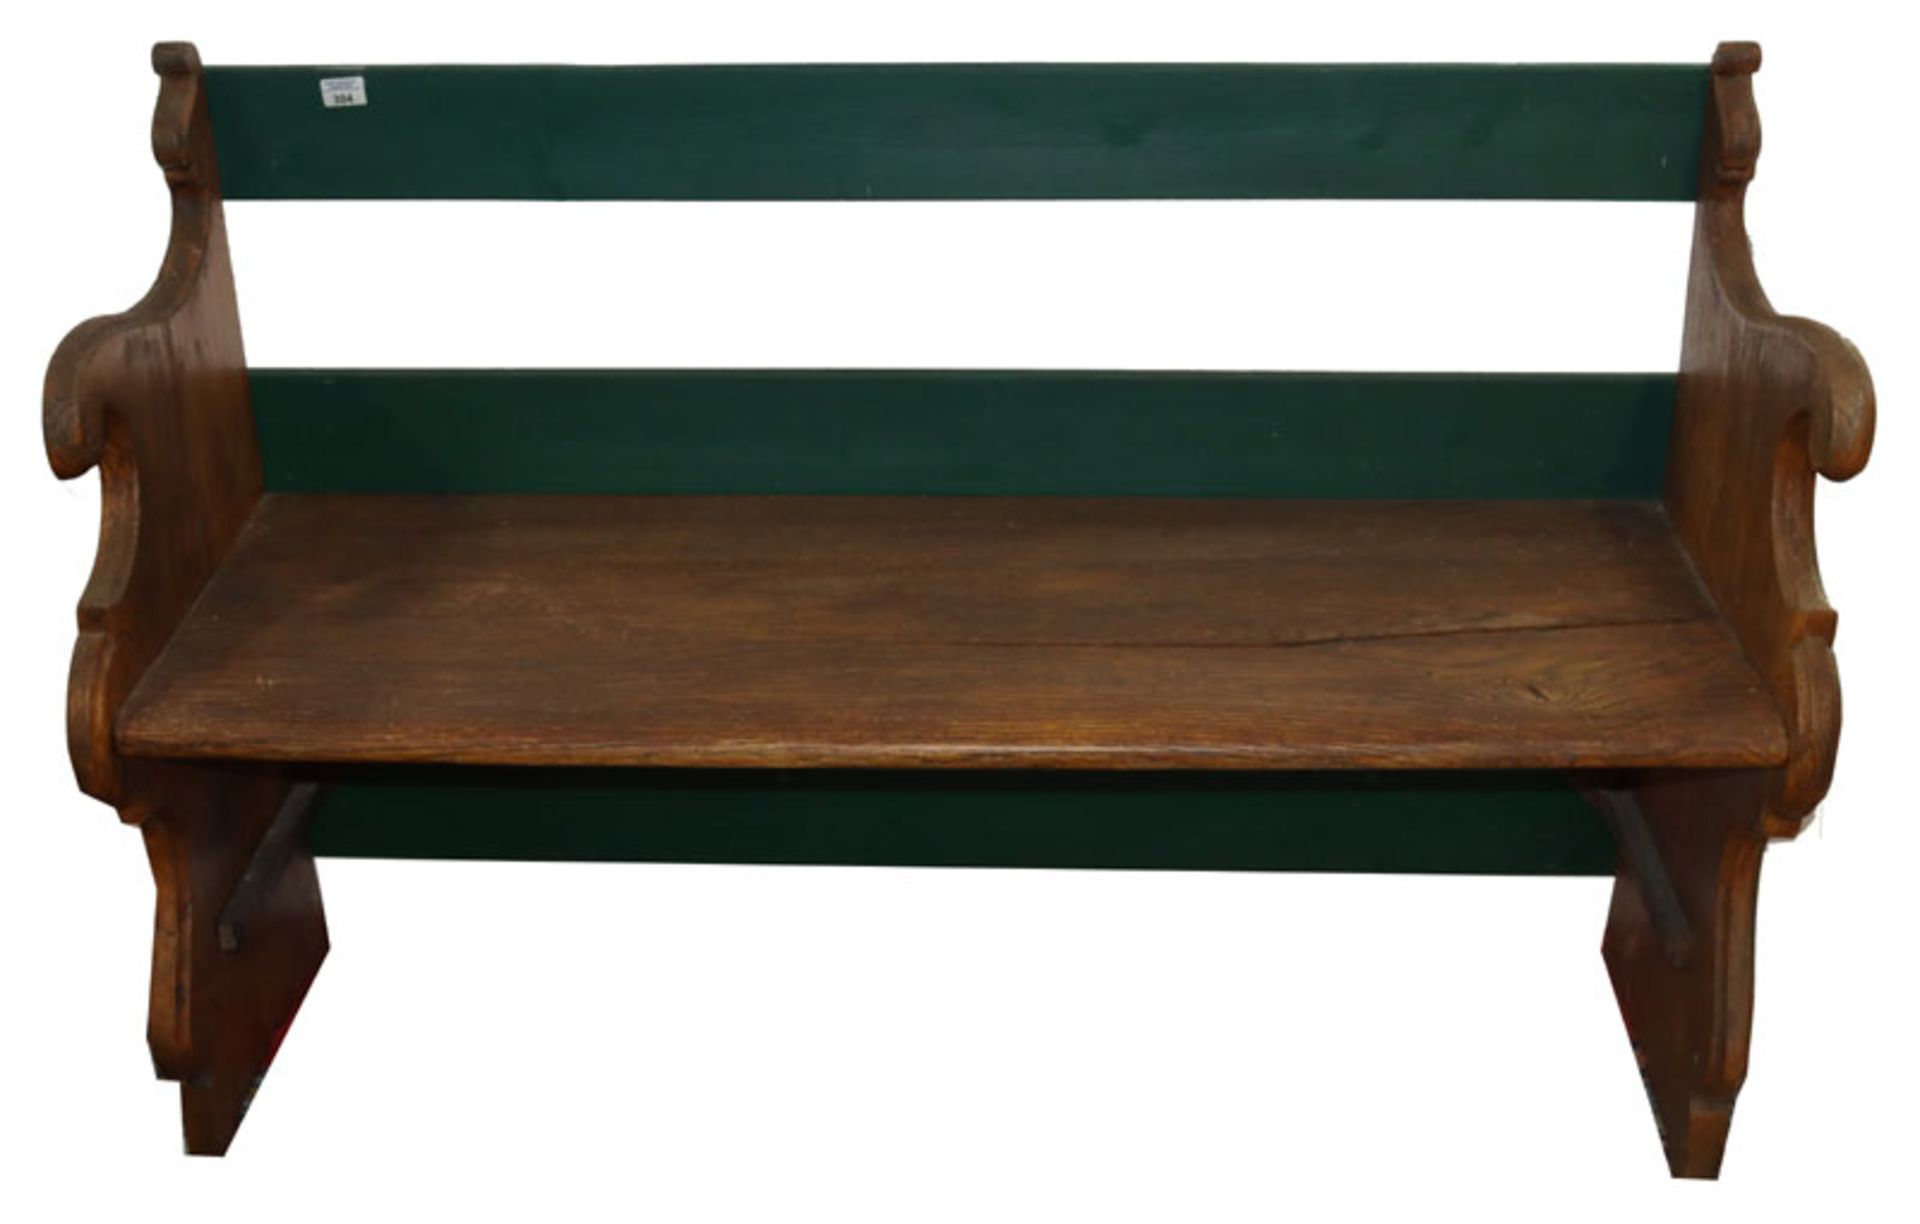 Holz Sitzbank, Eiche, dunkel gebeizt, Lehne grün bemalt, H 90 cm, B 134 cm, T 44 cm,